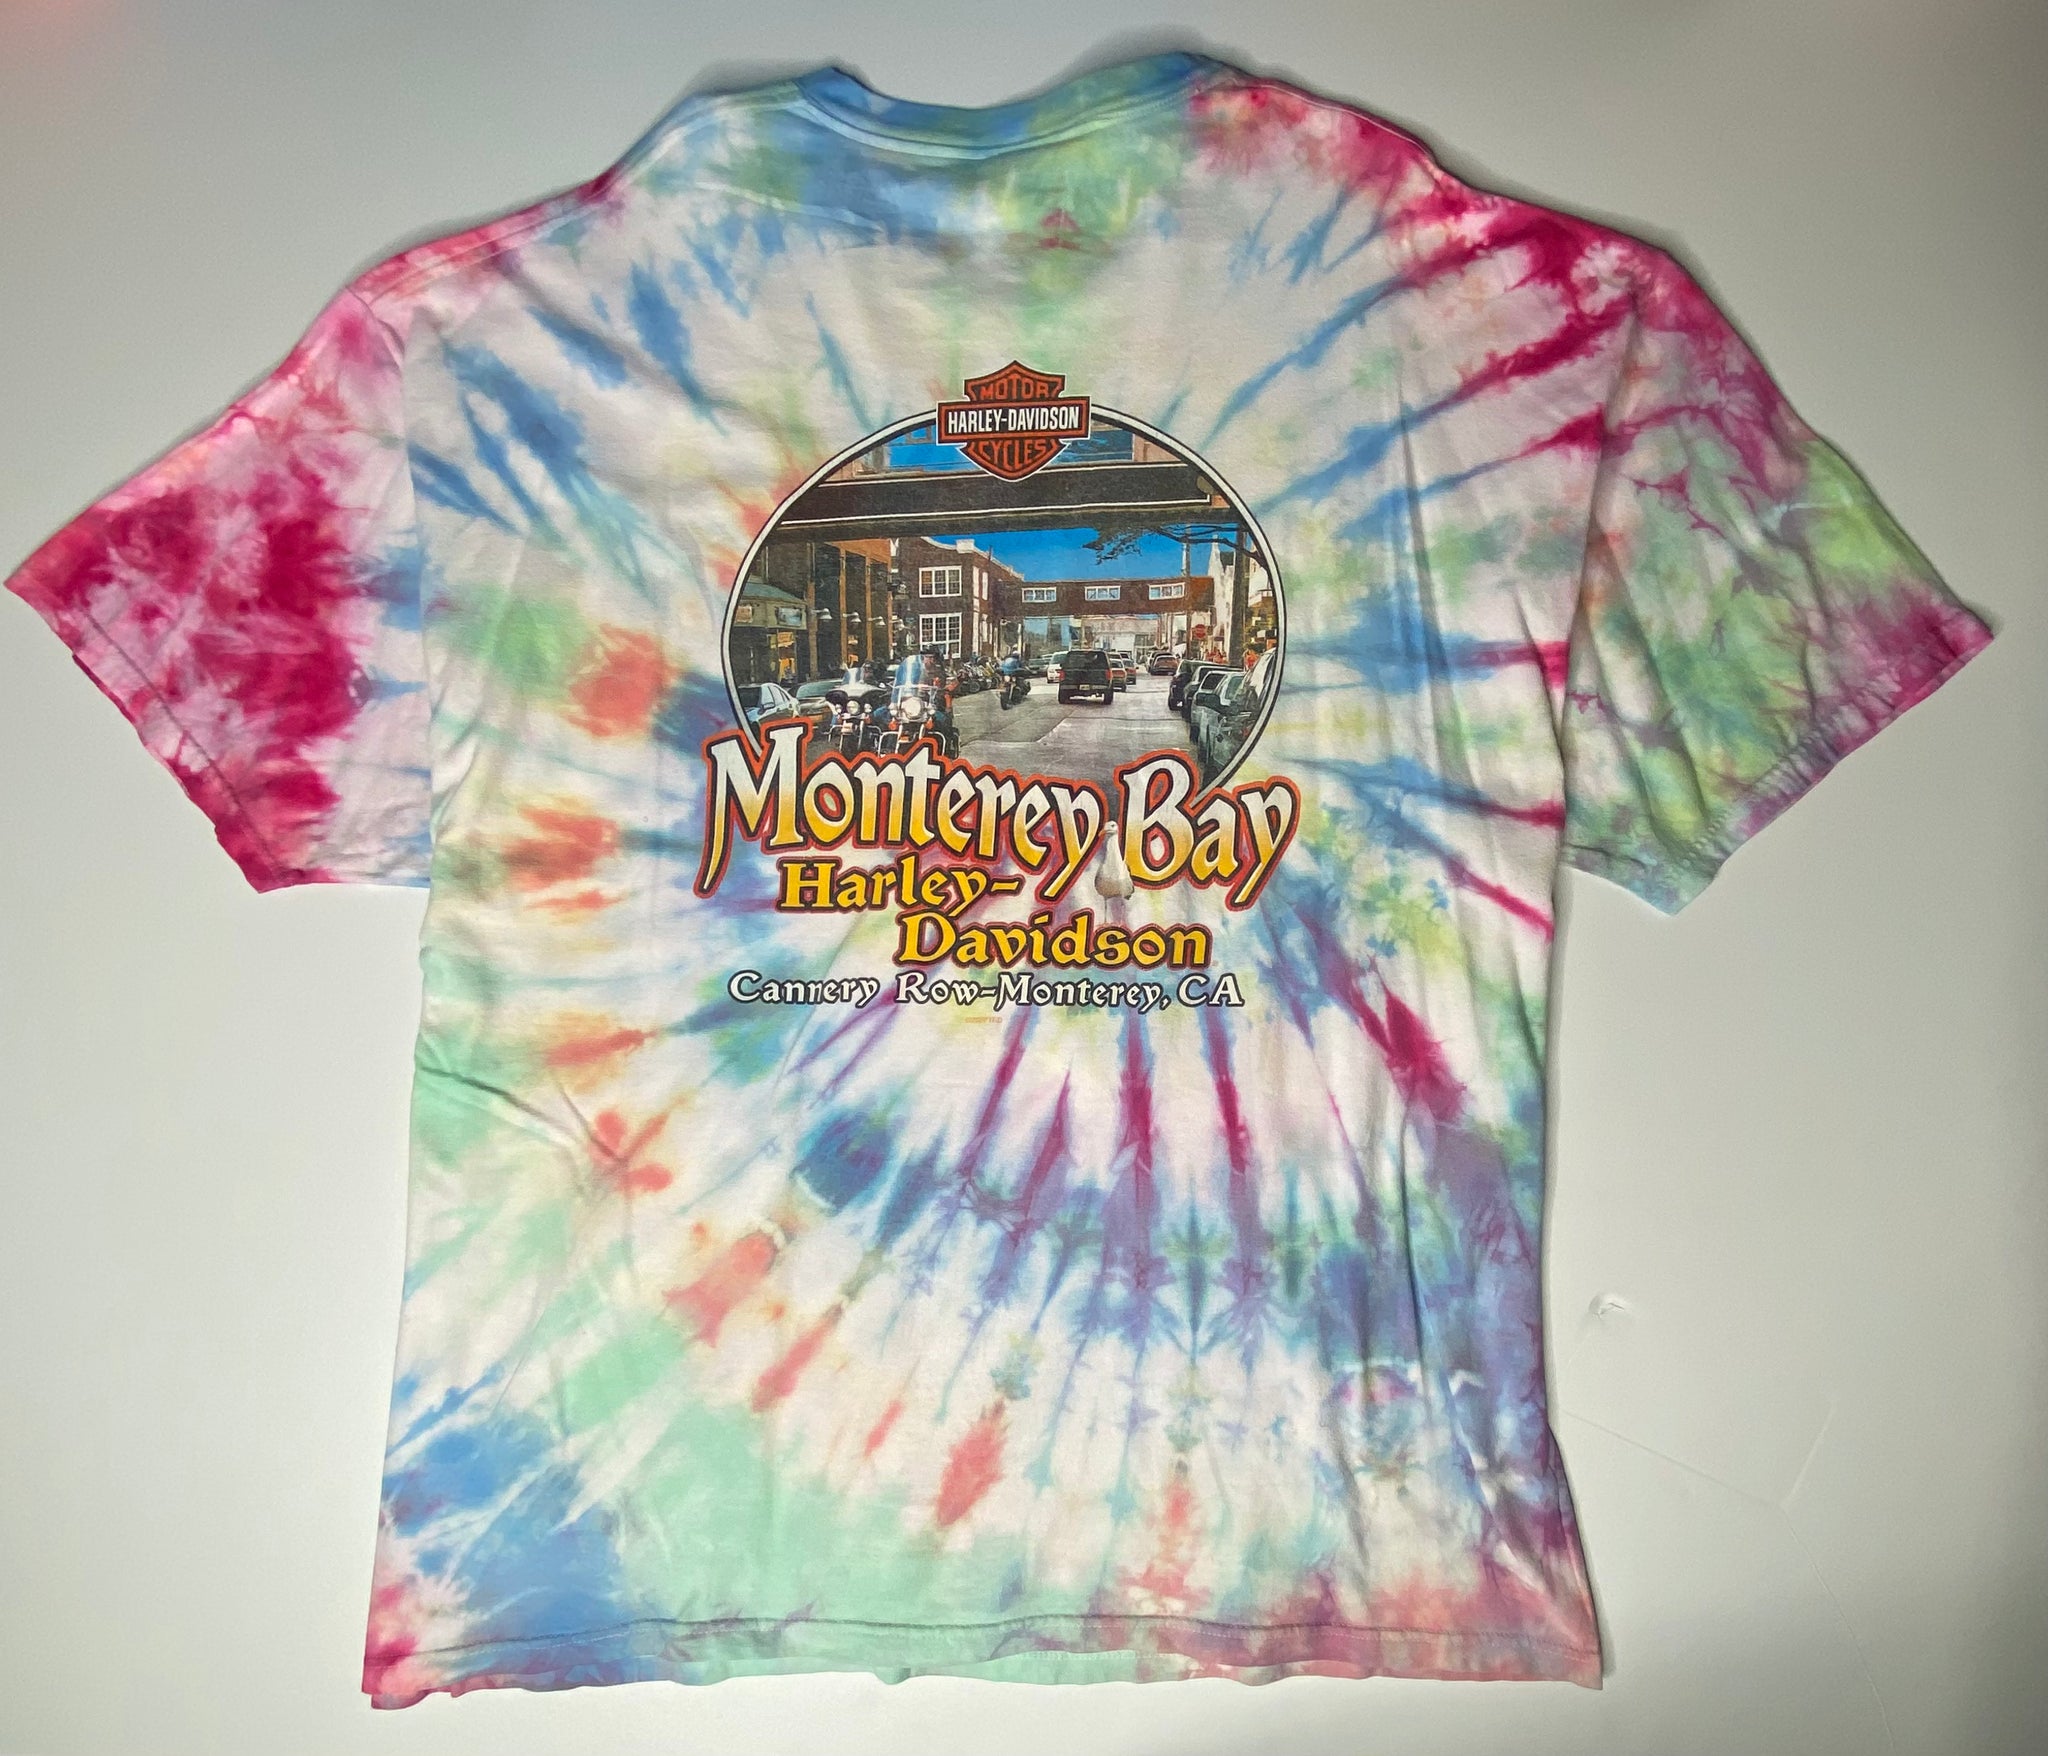 Vintage tiy dye monterey bay harley davidson t shirt